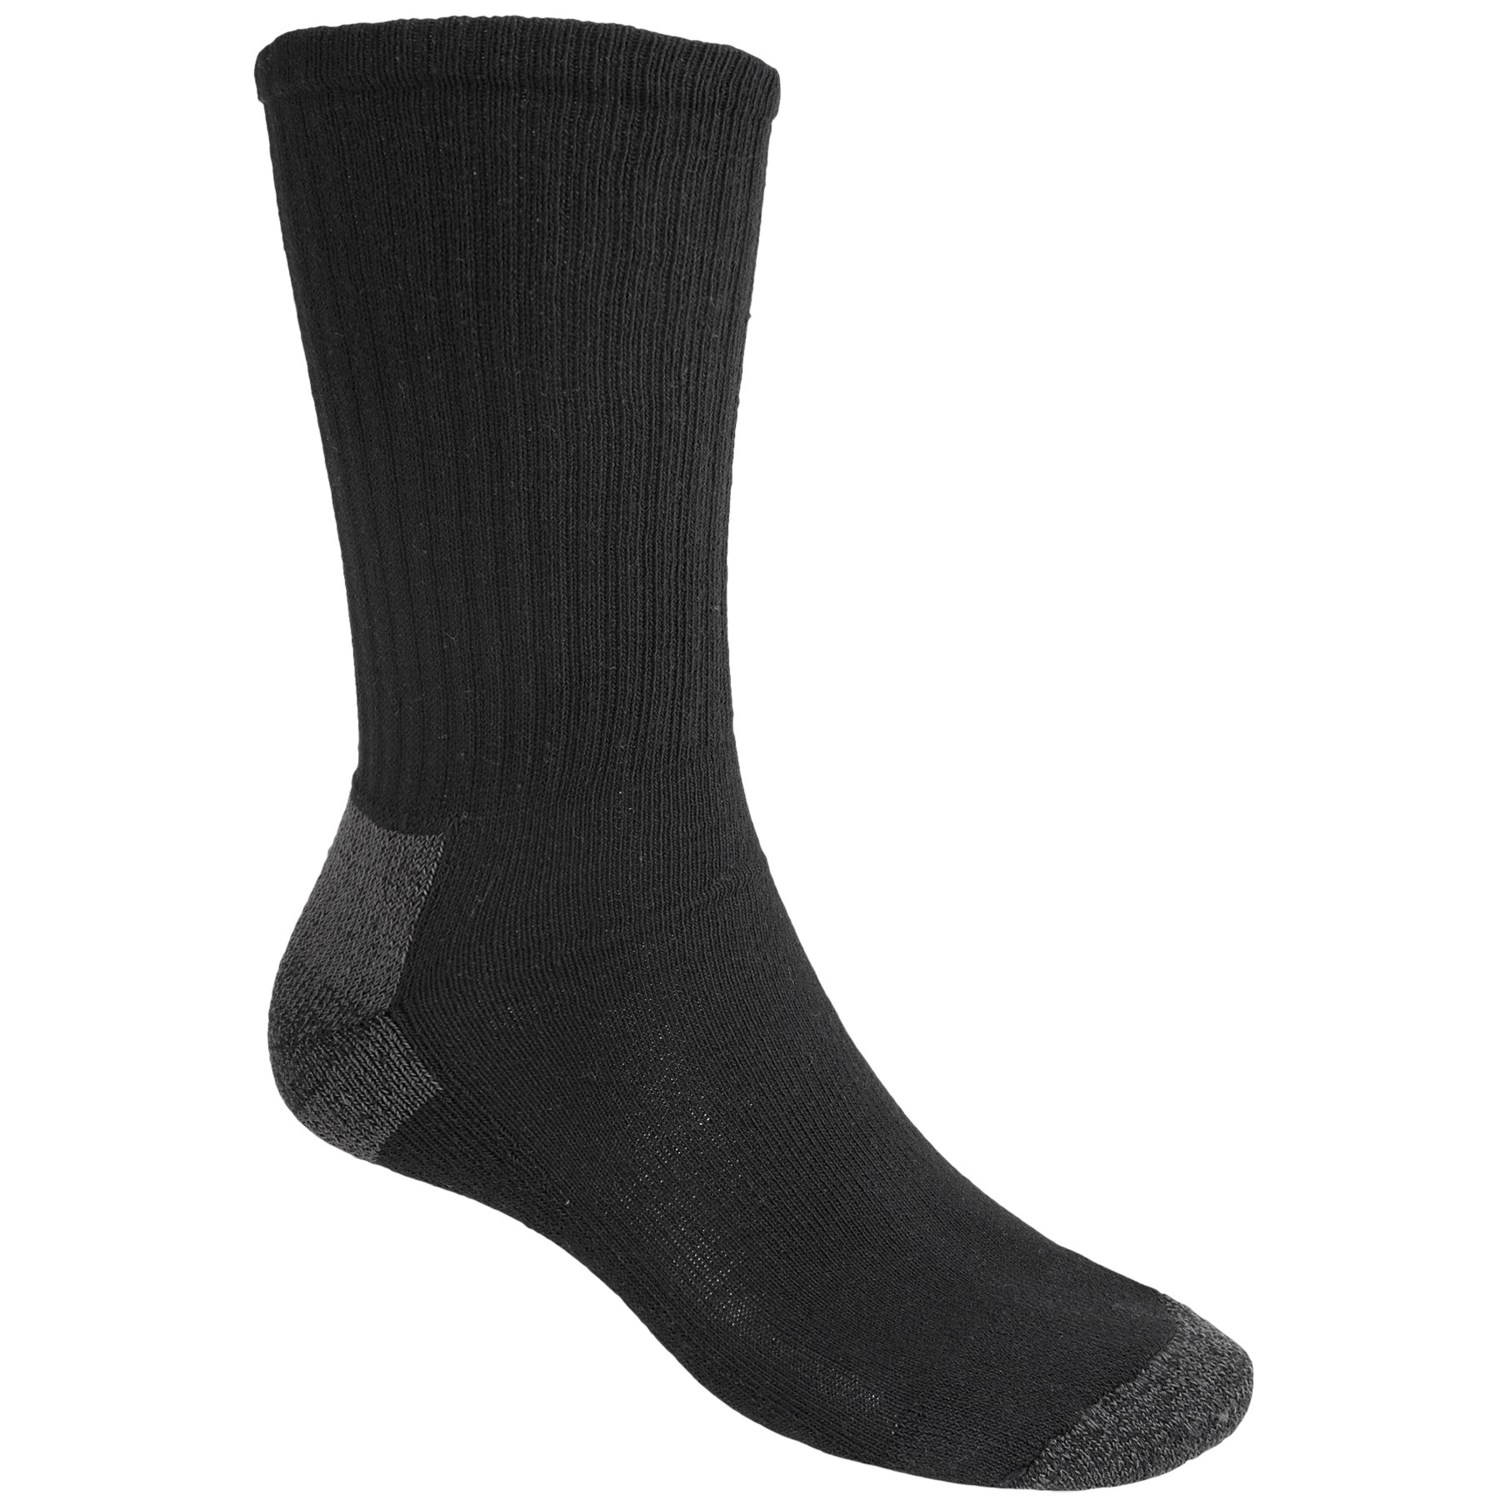 Wolverine Cotton Comfort Work Socks (For Men) 7399W - Save 40%